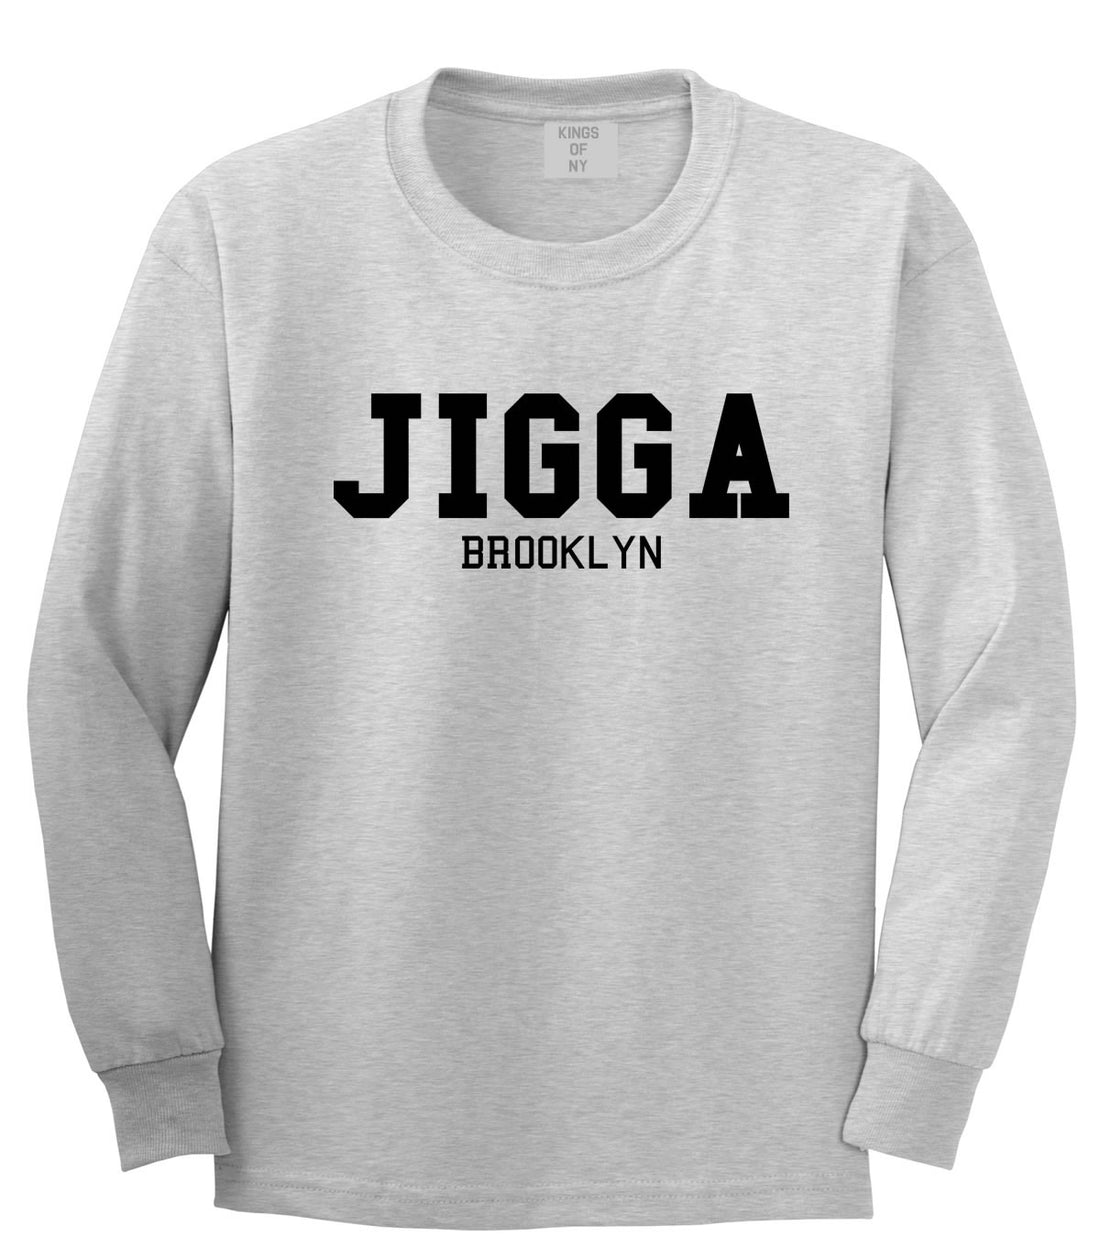 Jigga Brooklyn Long Sleeve T-Shirt in Grey by Kings Of NY